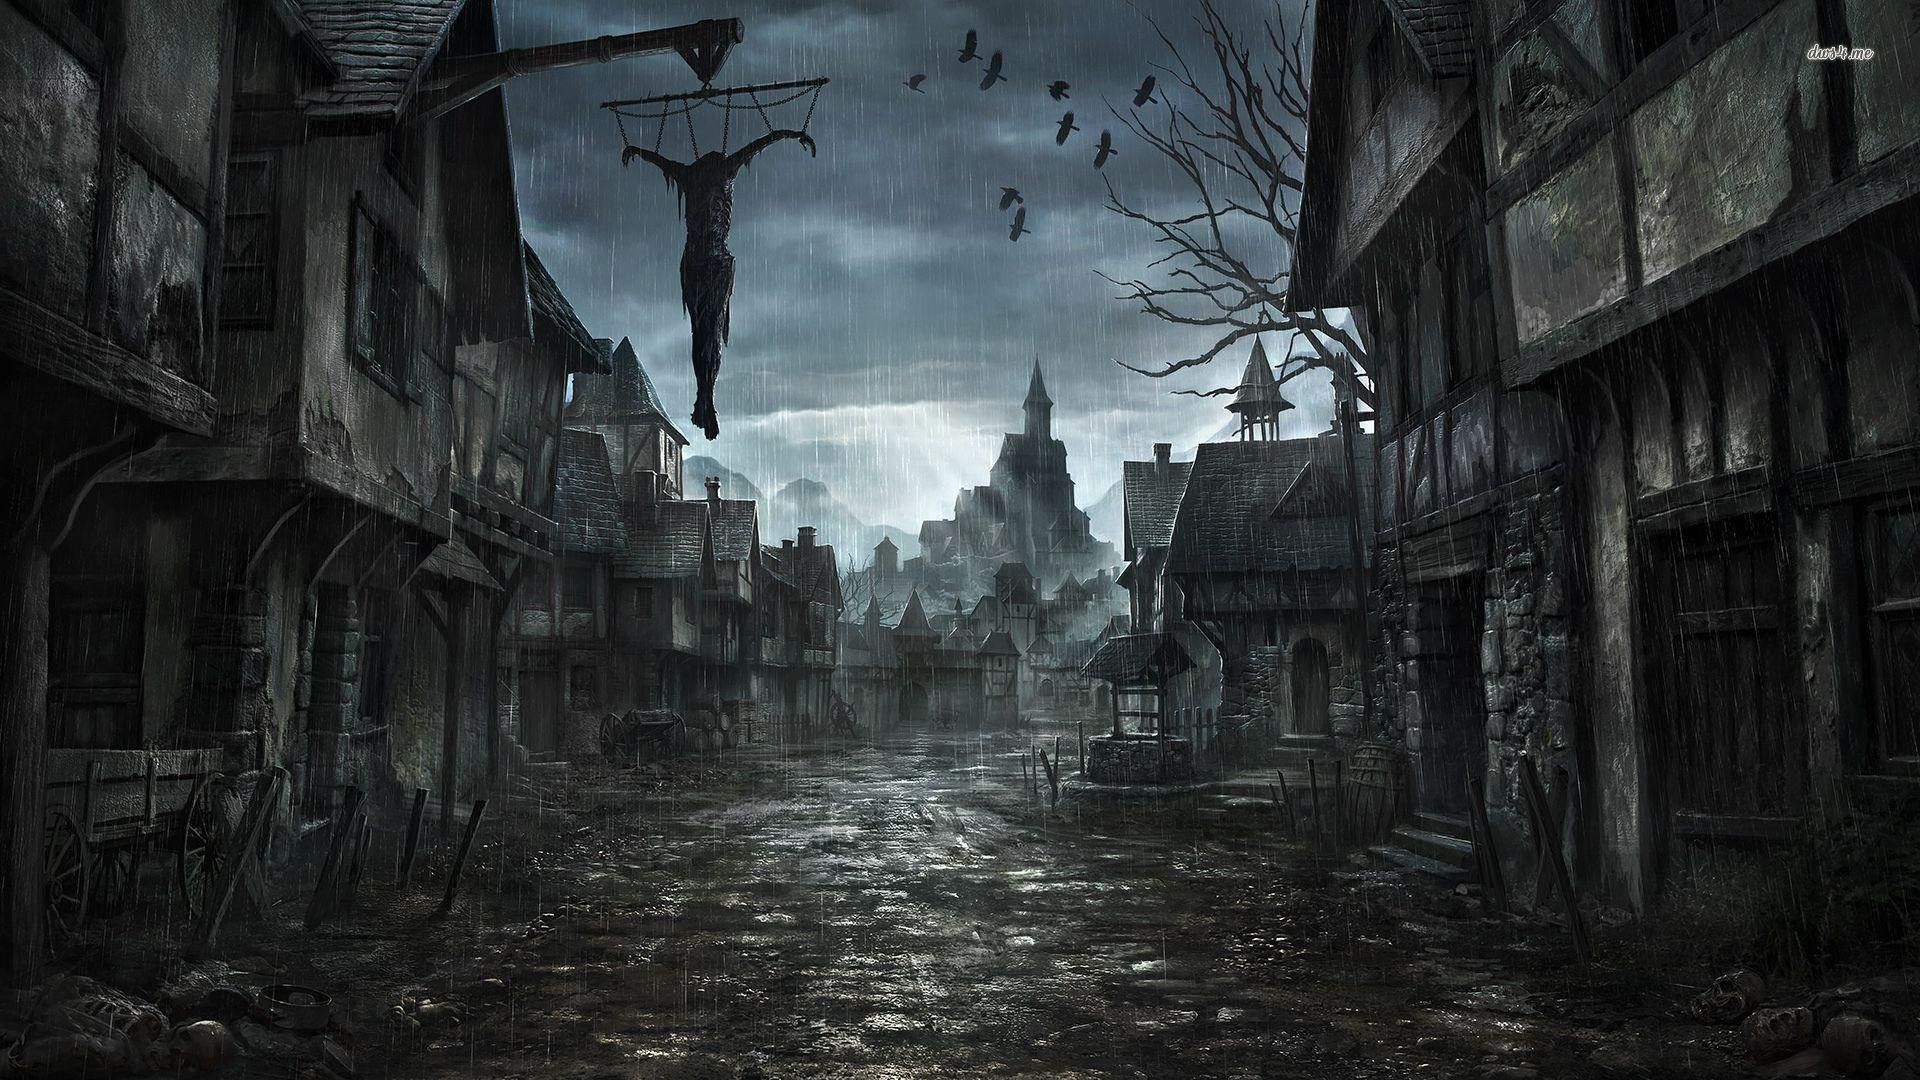 Dark fantasy art wallpaper - The old town - Creepy, horror